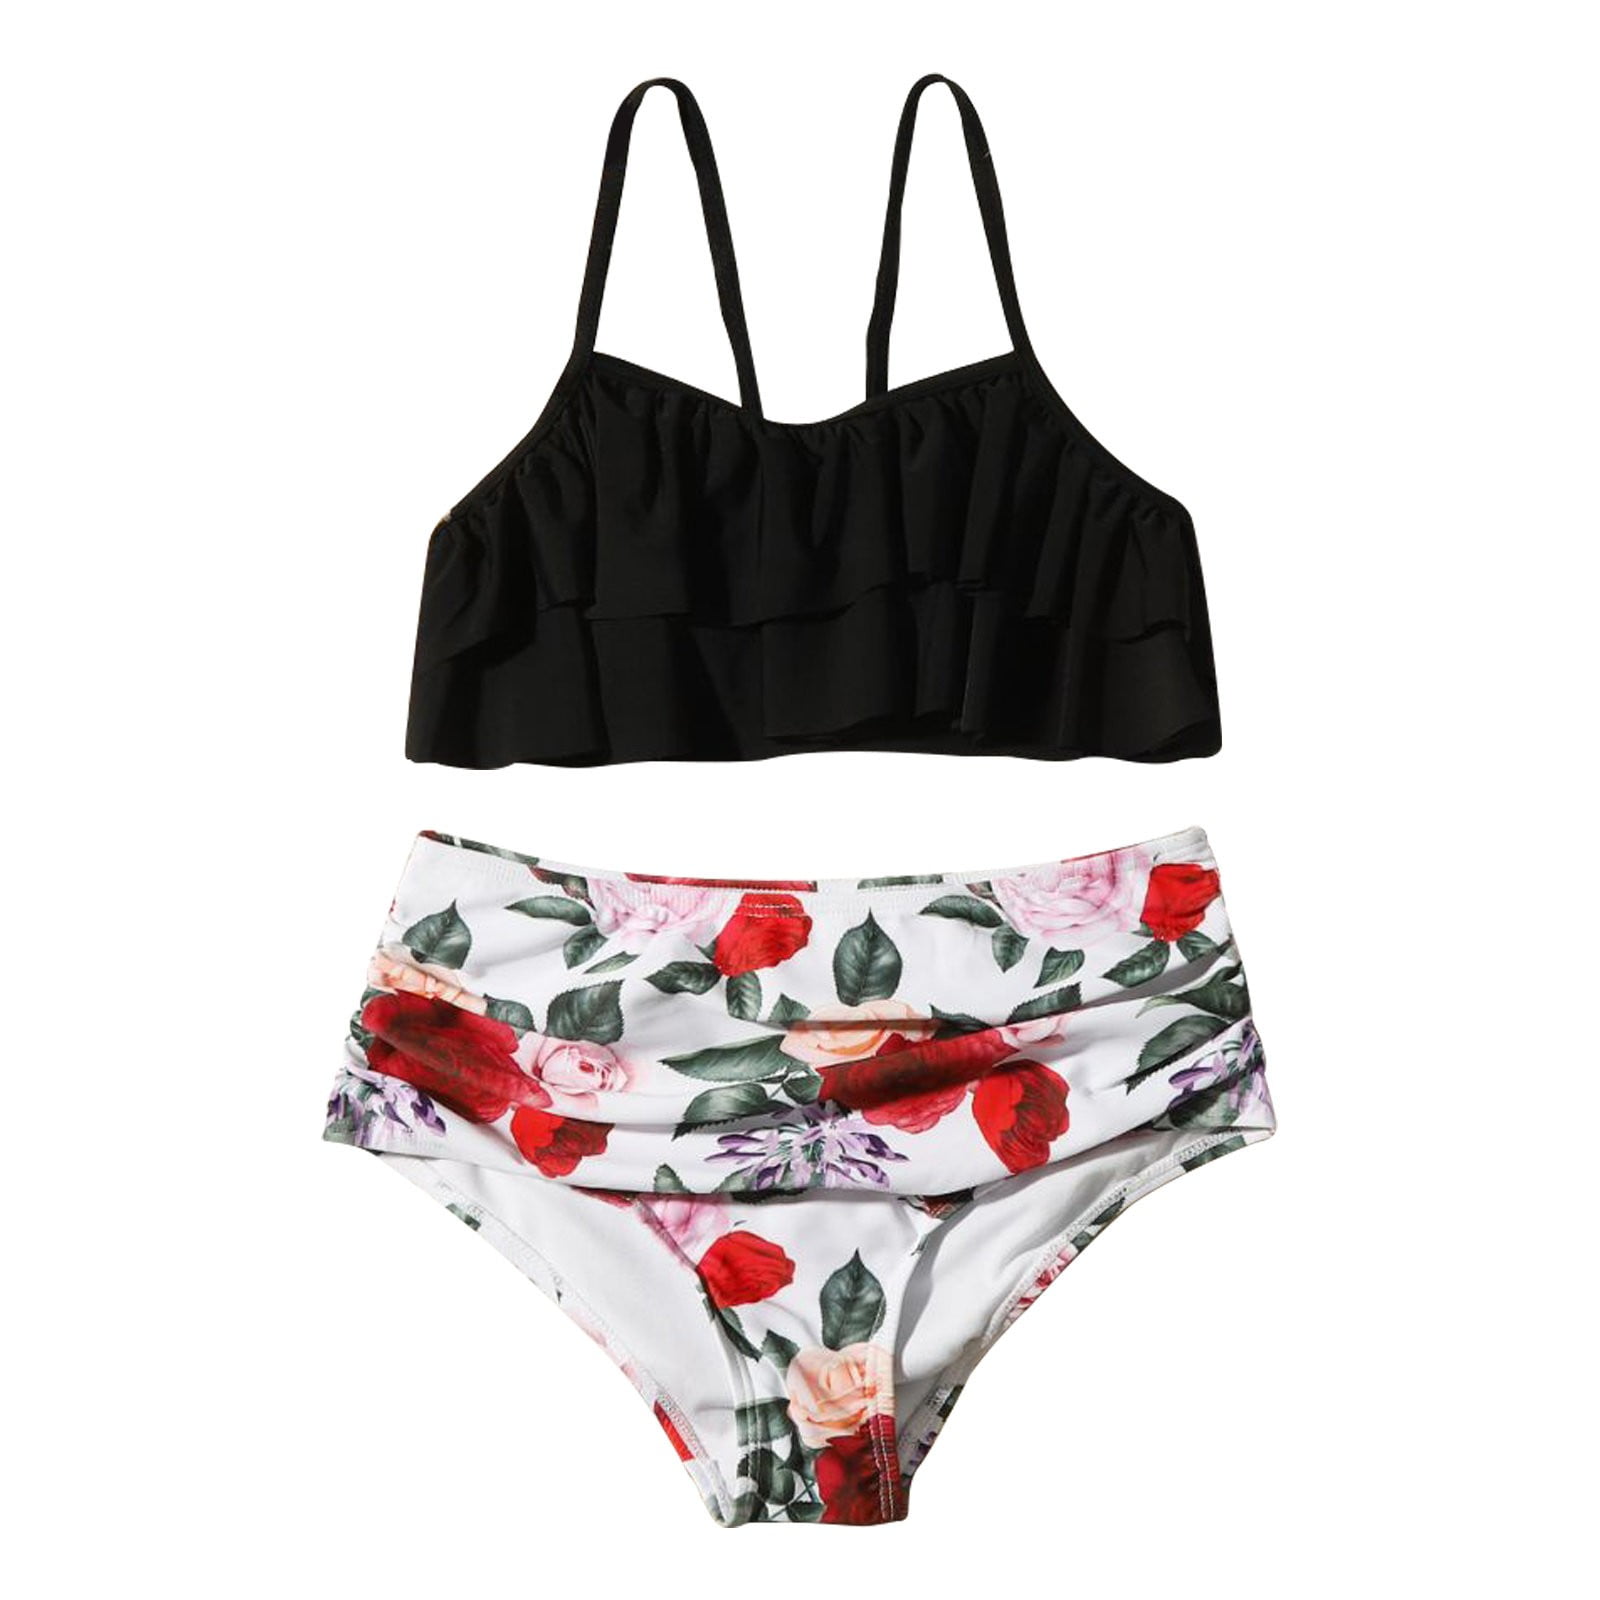 Uuszgmr Girls Swimsuits Two Piece Tankini Bathing Suits Summer Beach ...